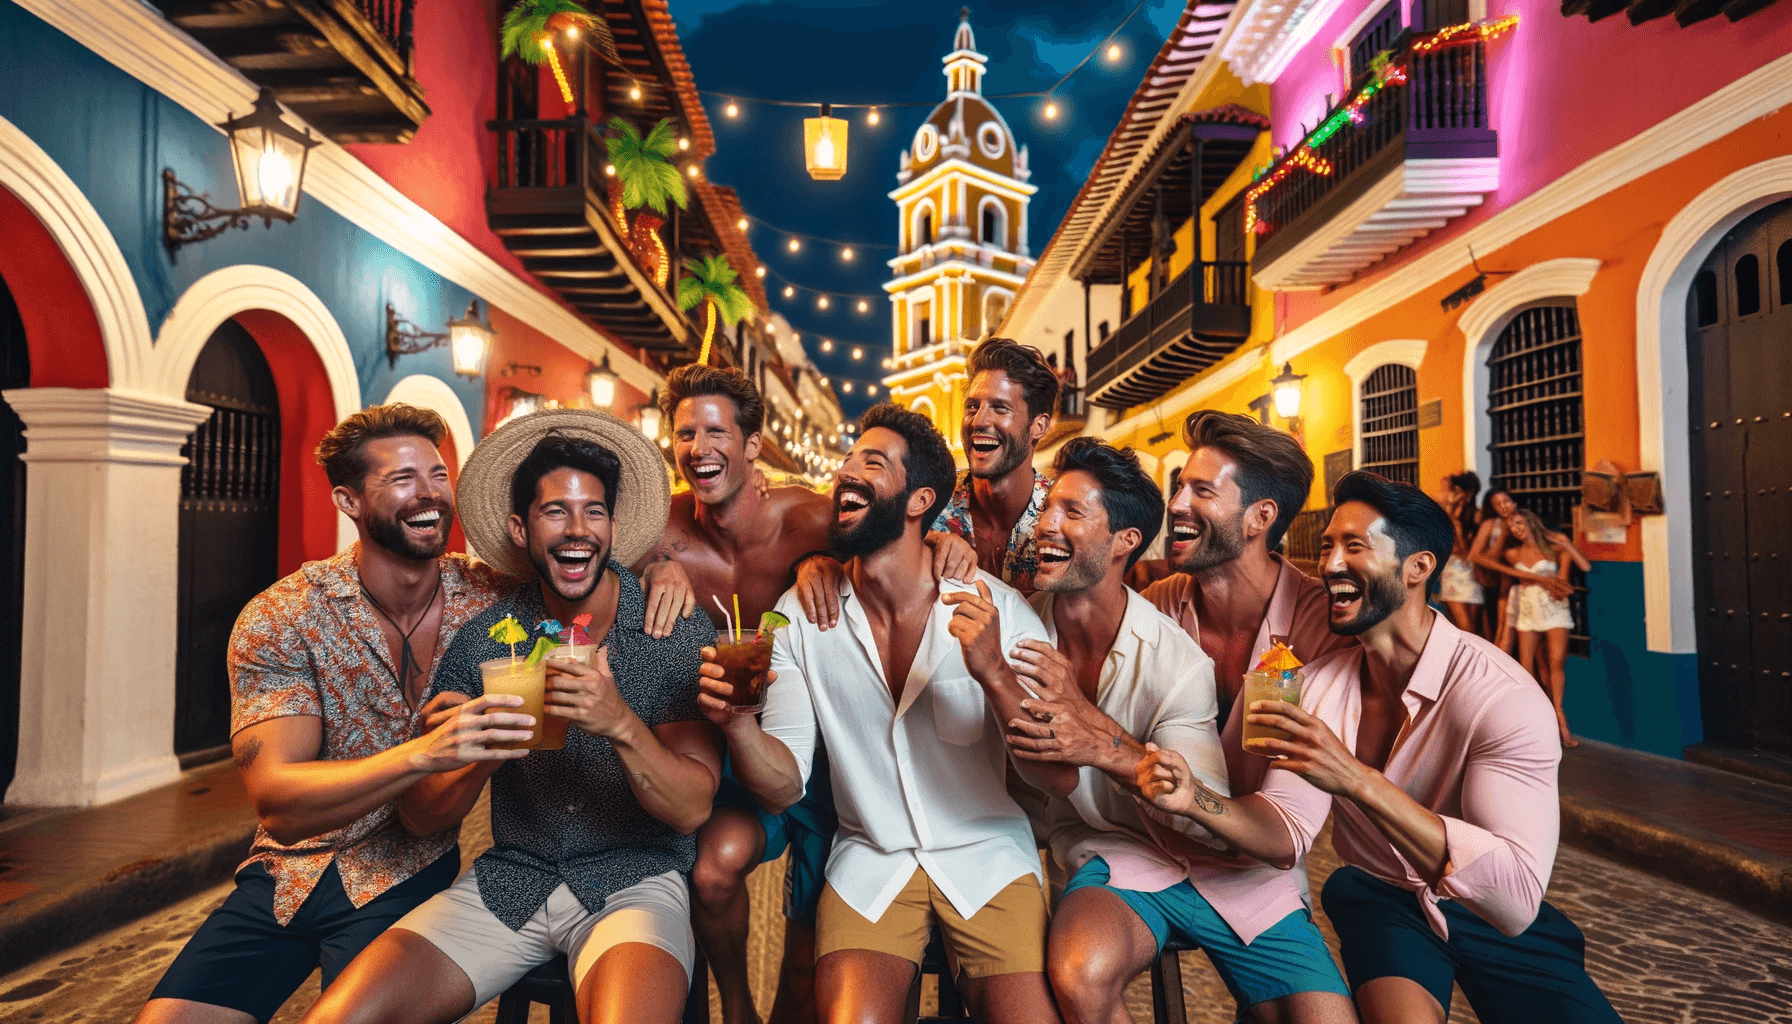 Cartagena Bachelor Party